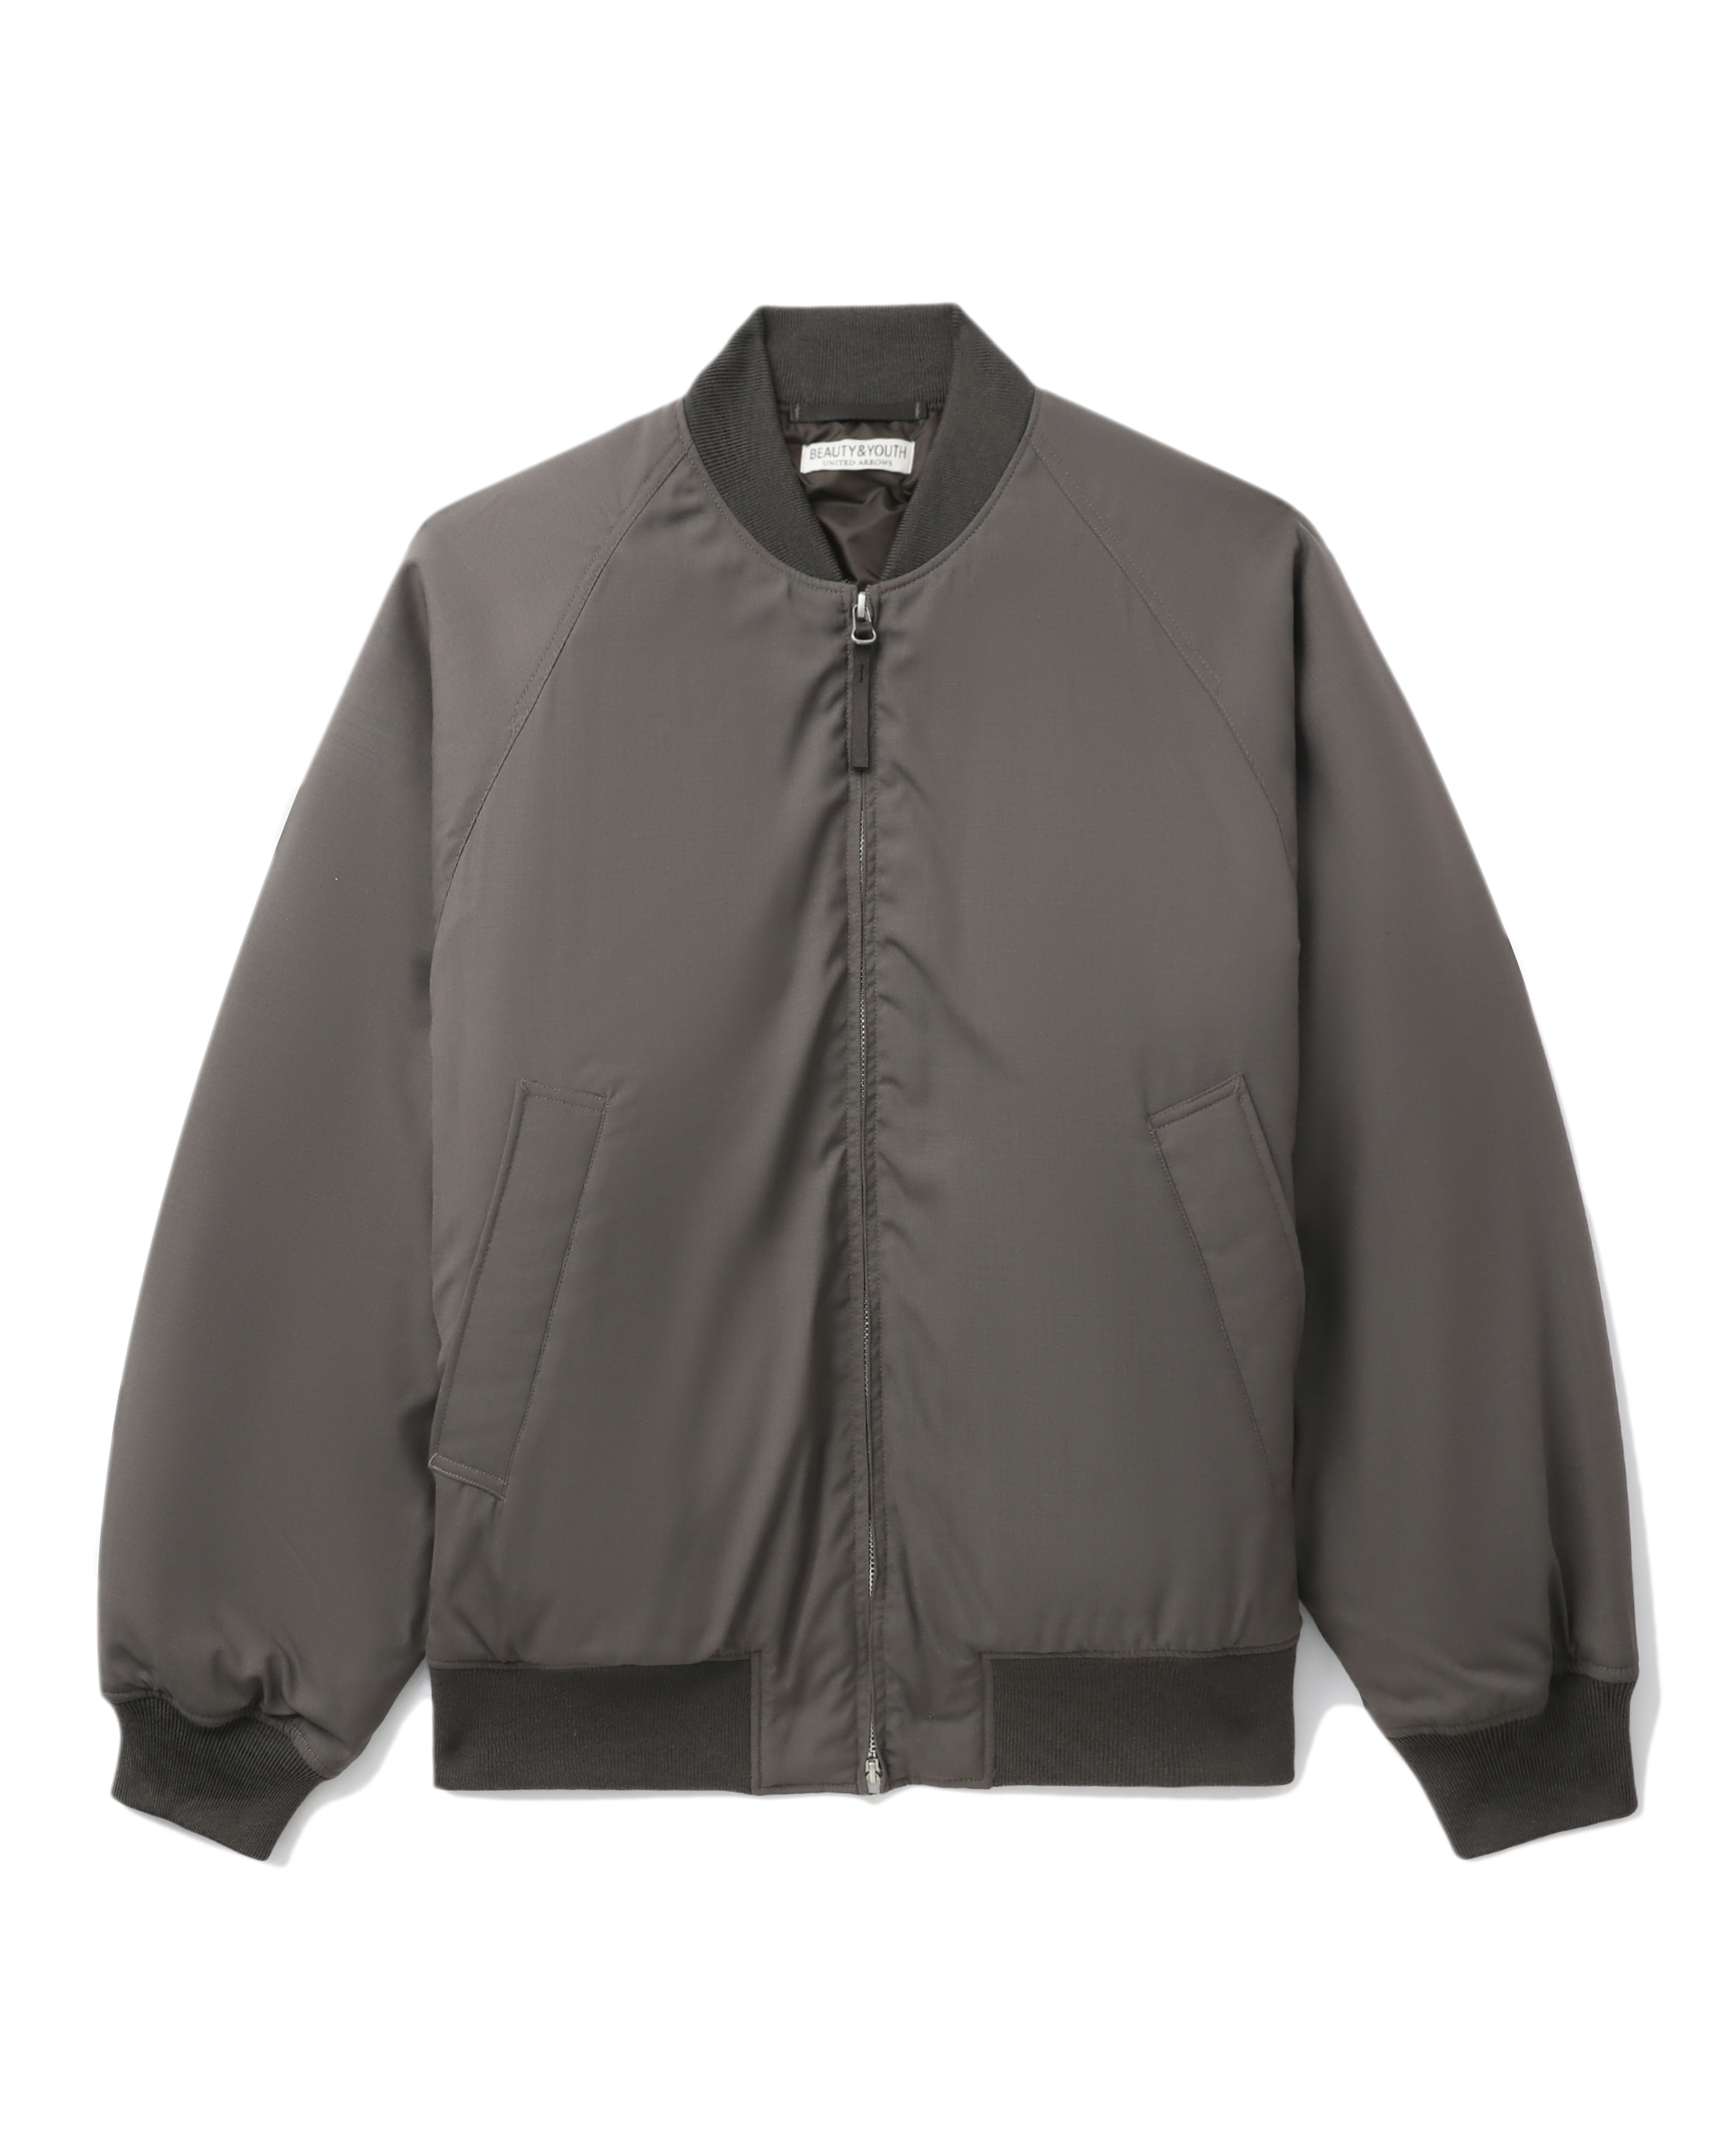 BEAUTY & YOUTH Zip up bomber jacket | ITeSHOP